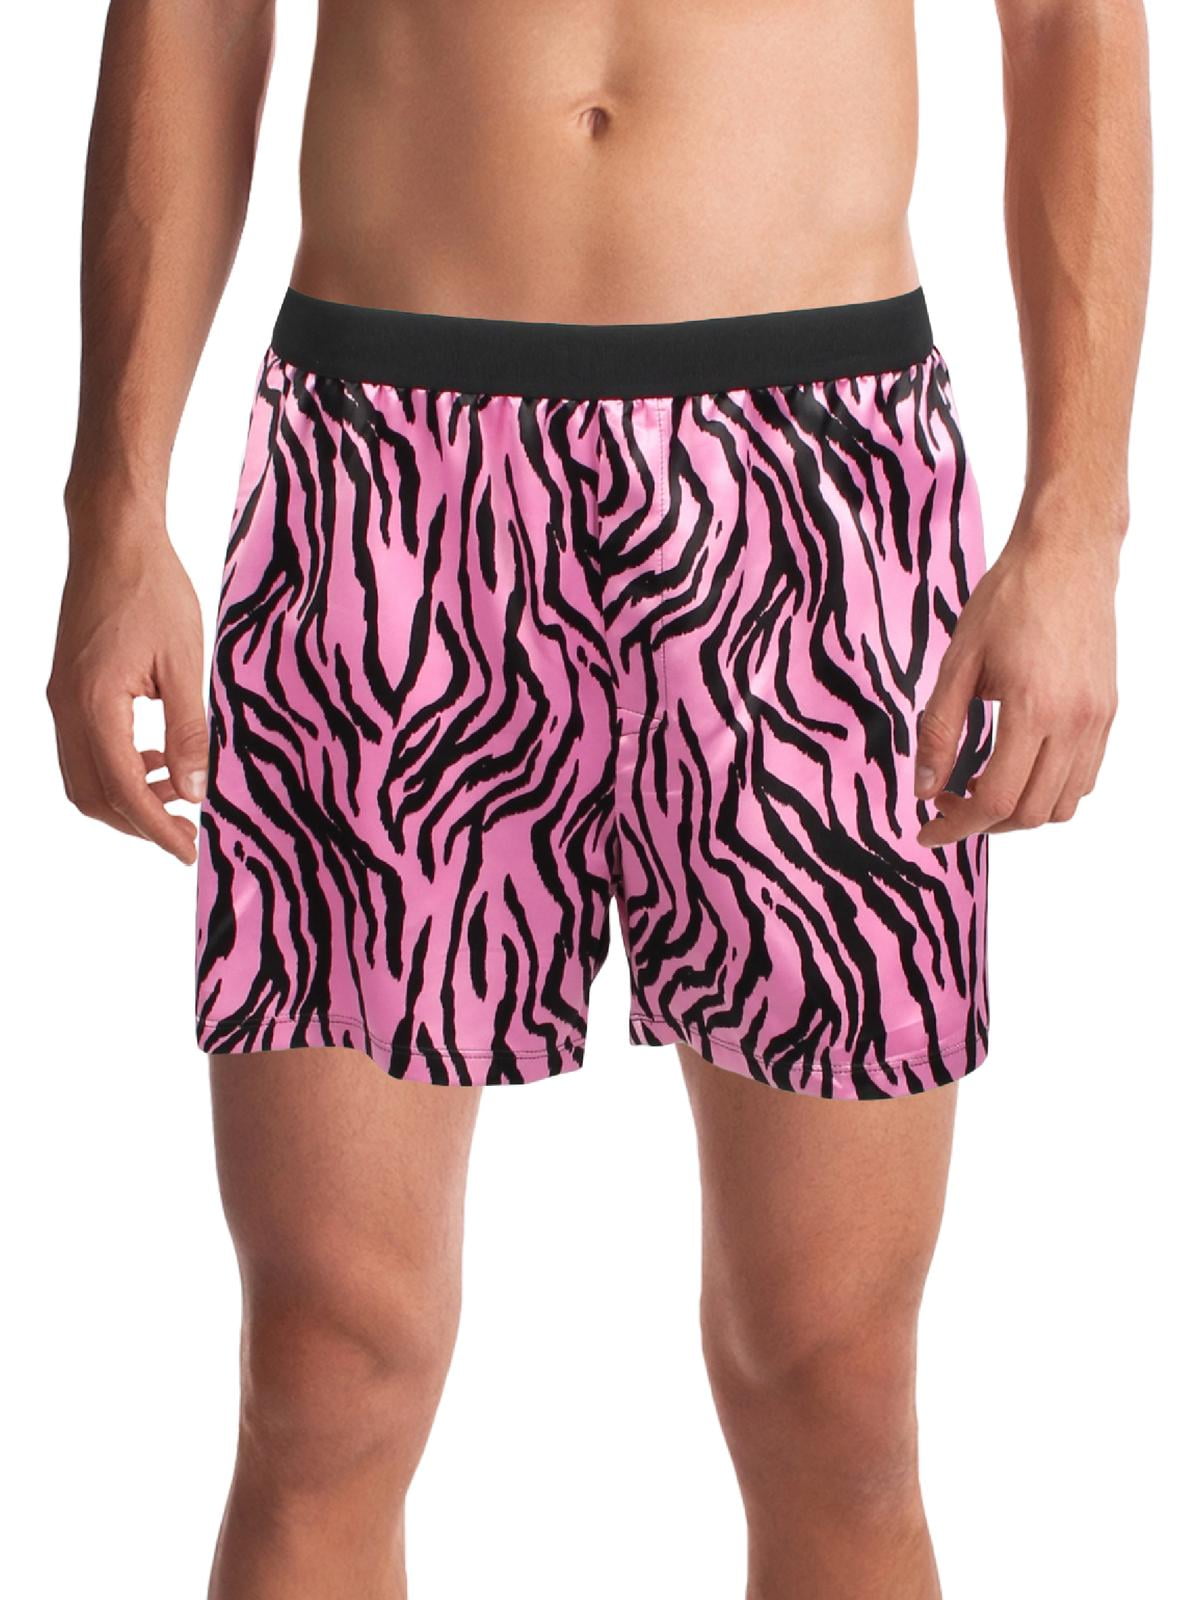 Productief bouwer slinger INC Mens Zebra Shorts Boxers - Walmart.com